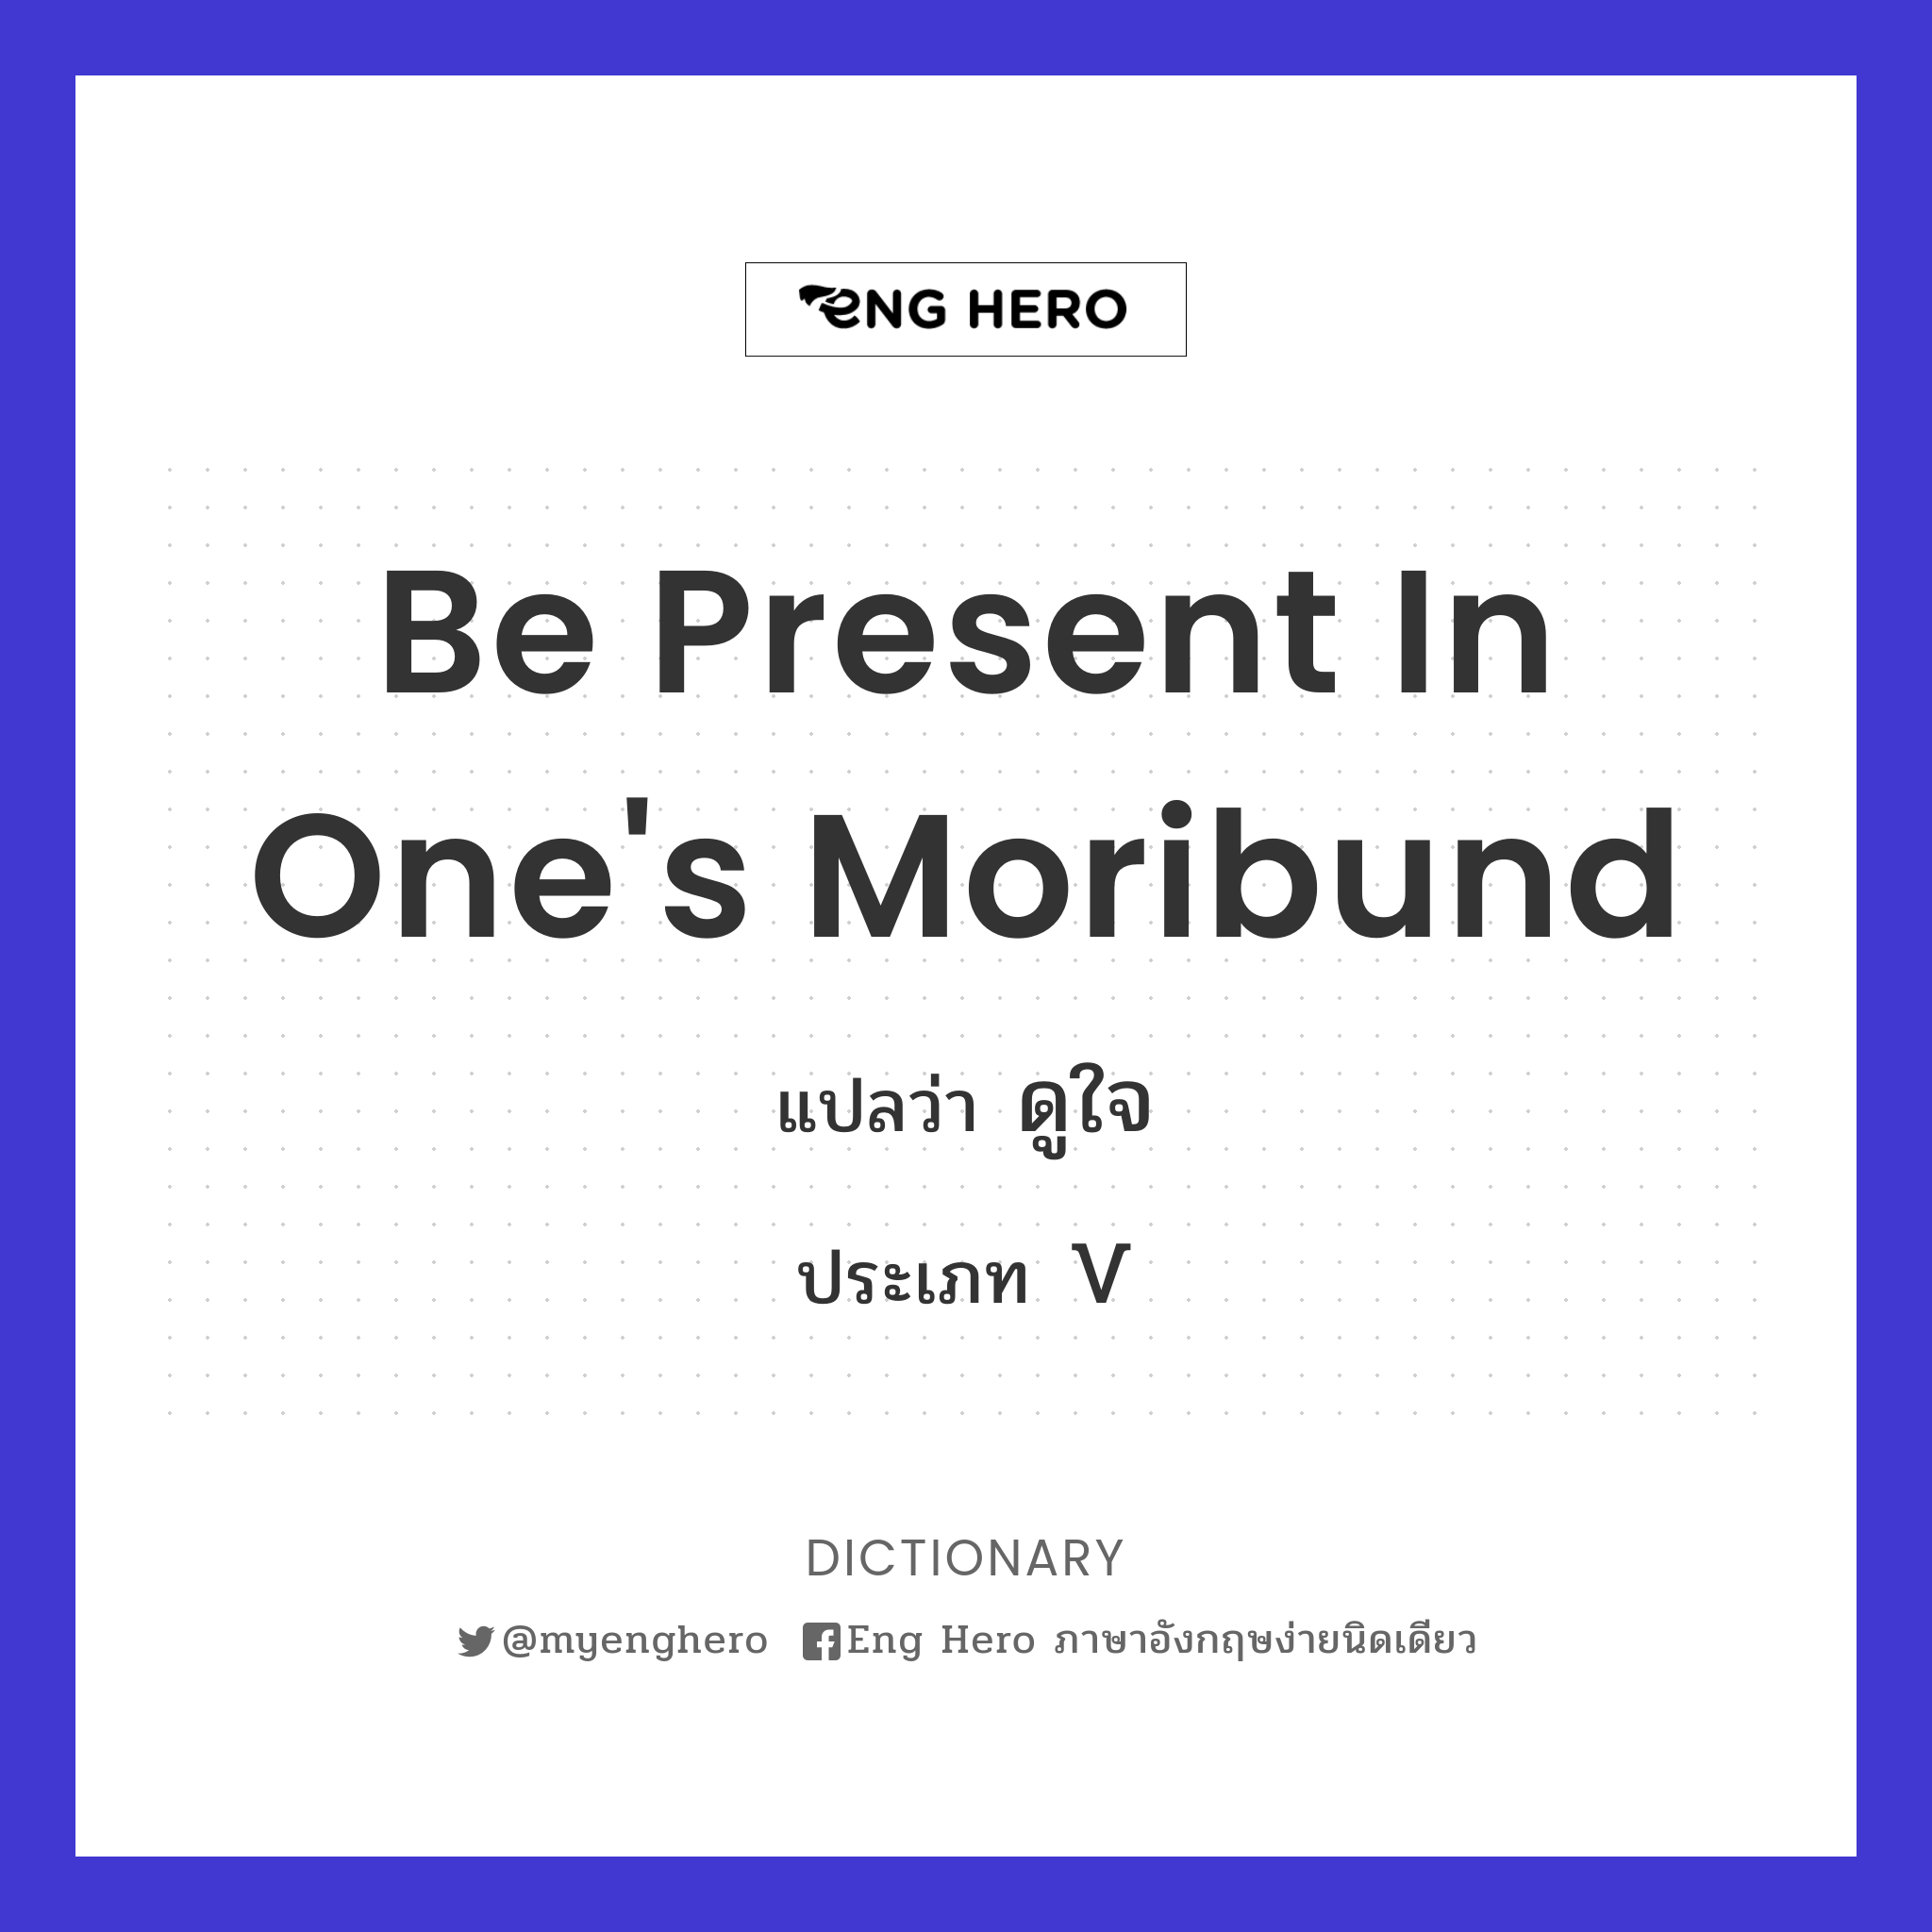 be present in one's moribund